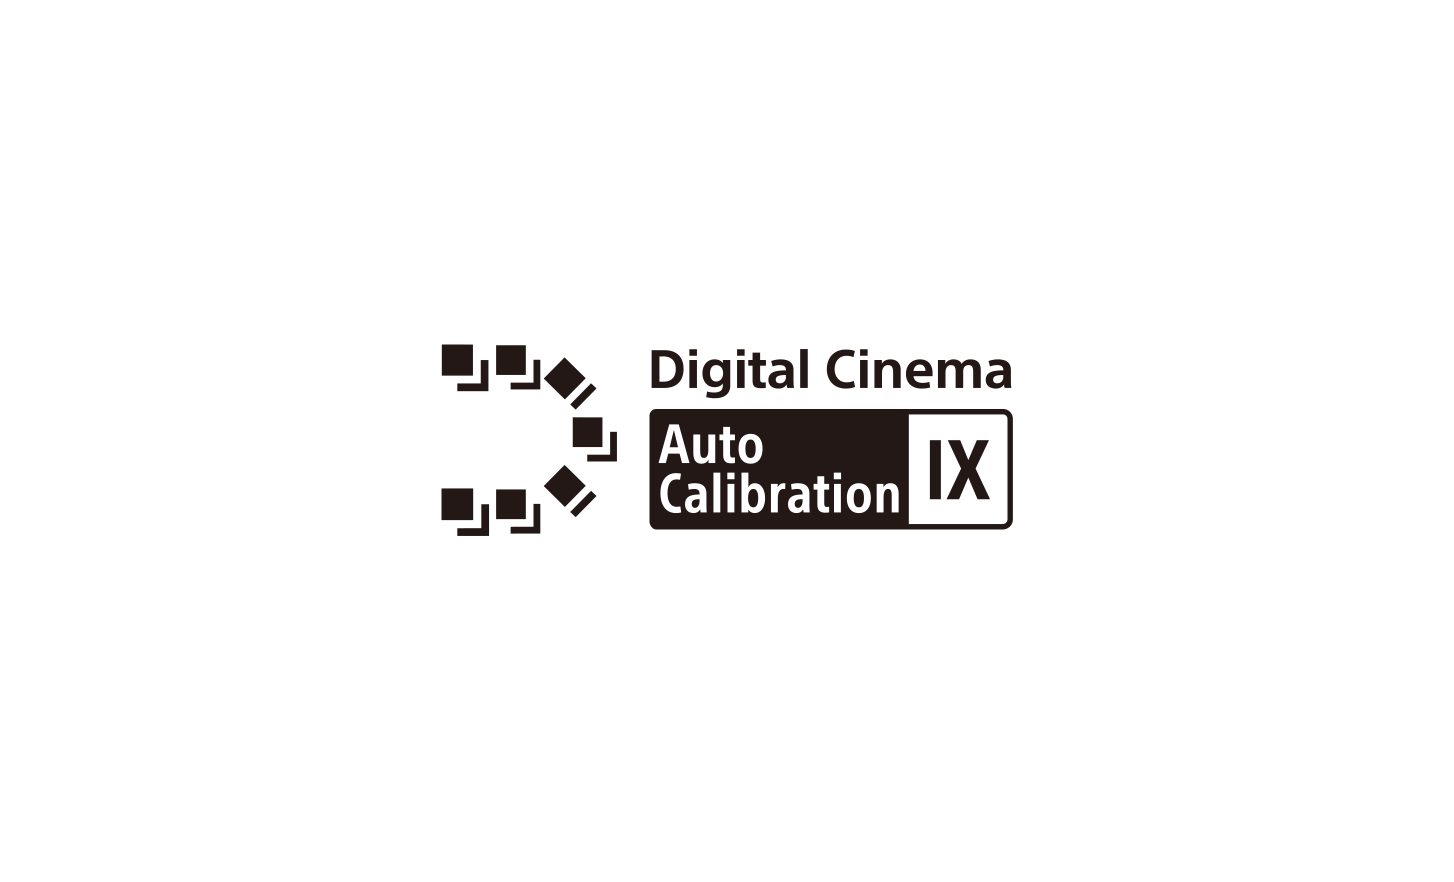 Image of a Digital Cinema Auto Calibration IX logo